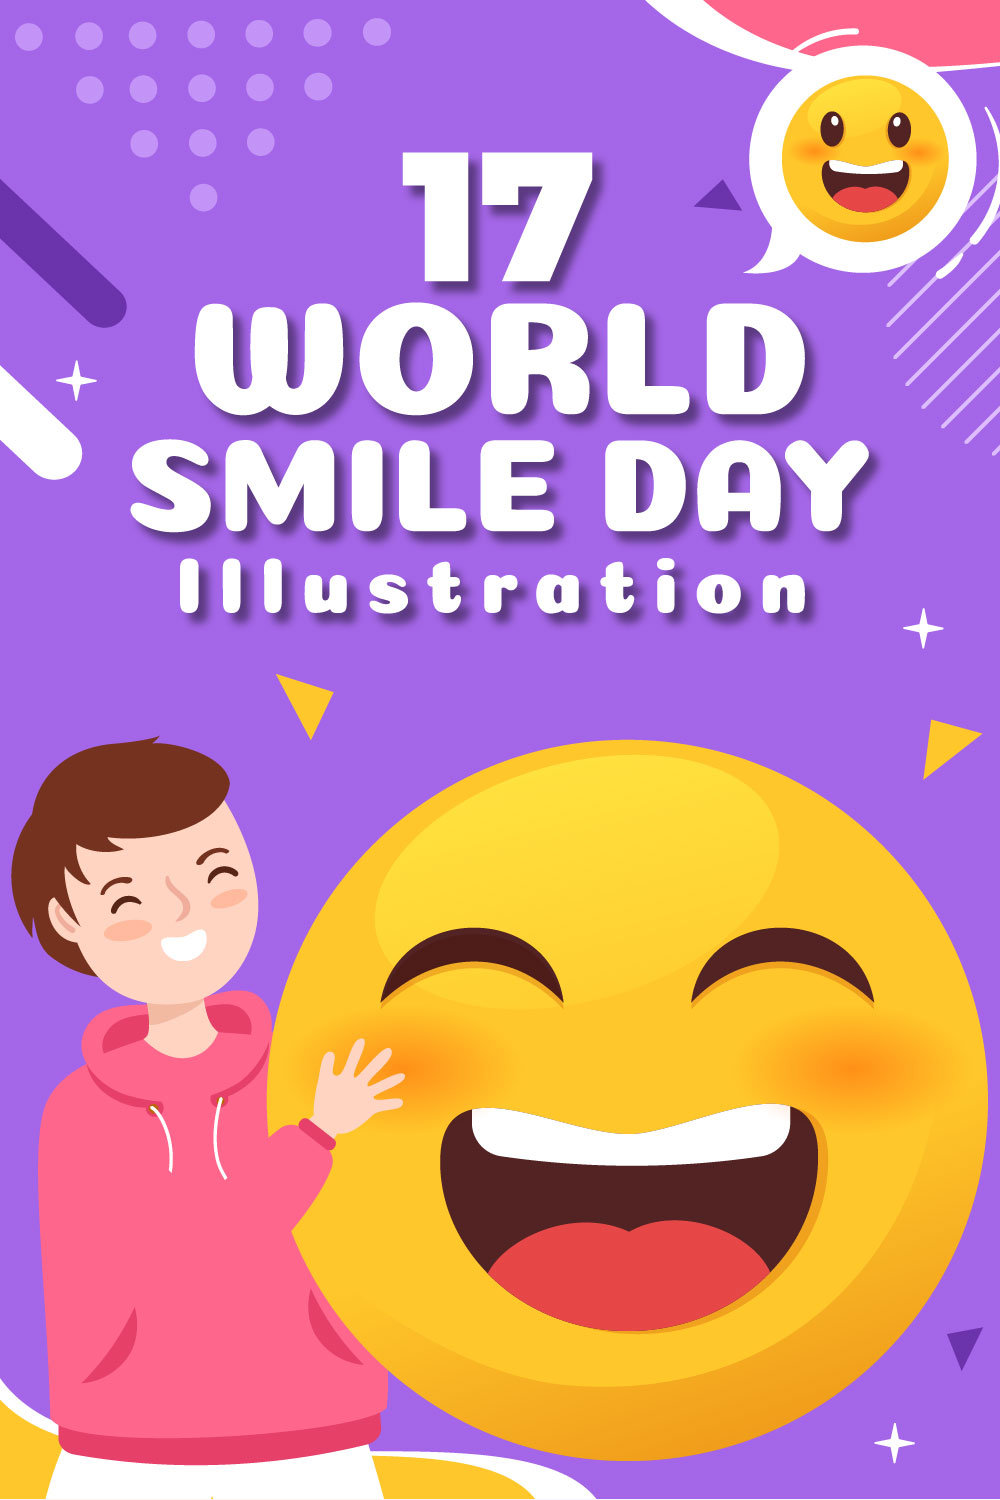 17 World Smile Day Illustration pinterest image.